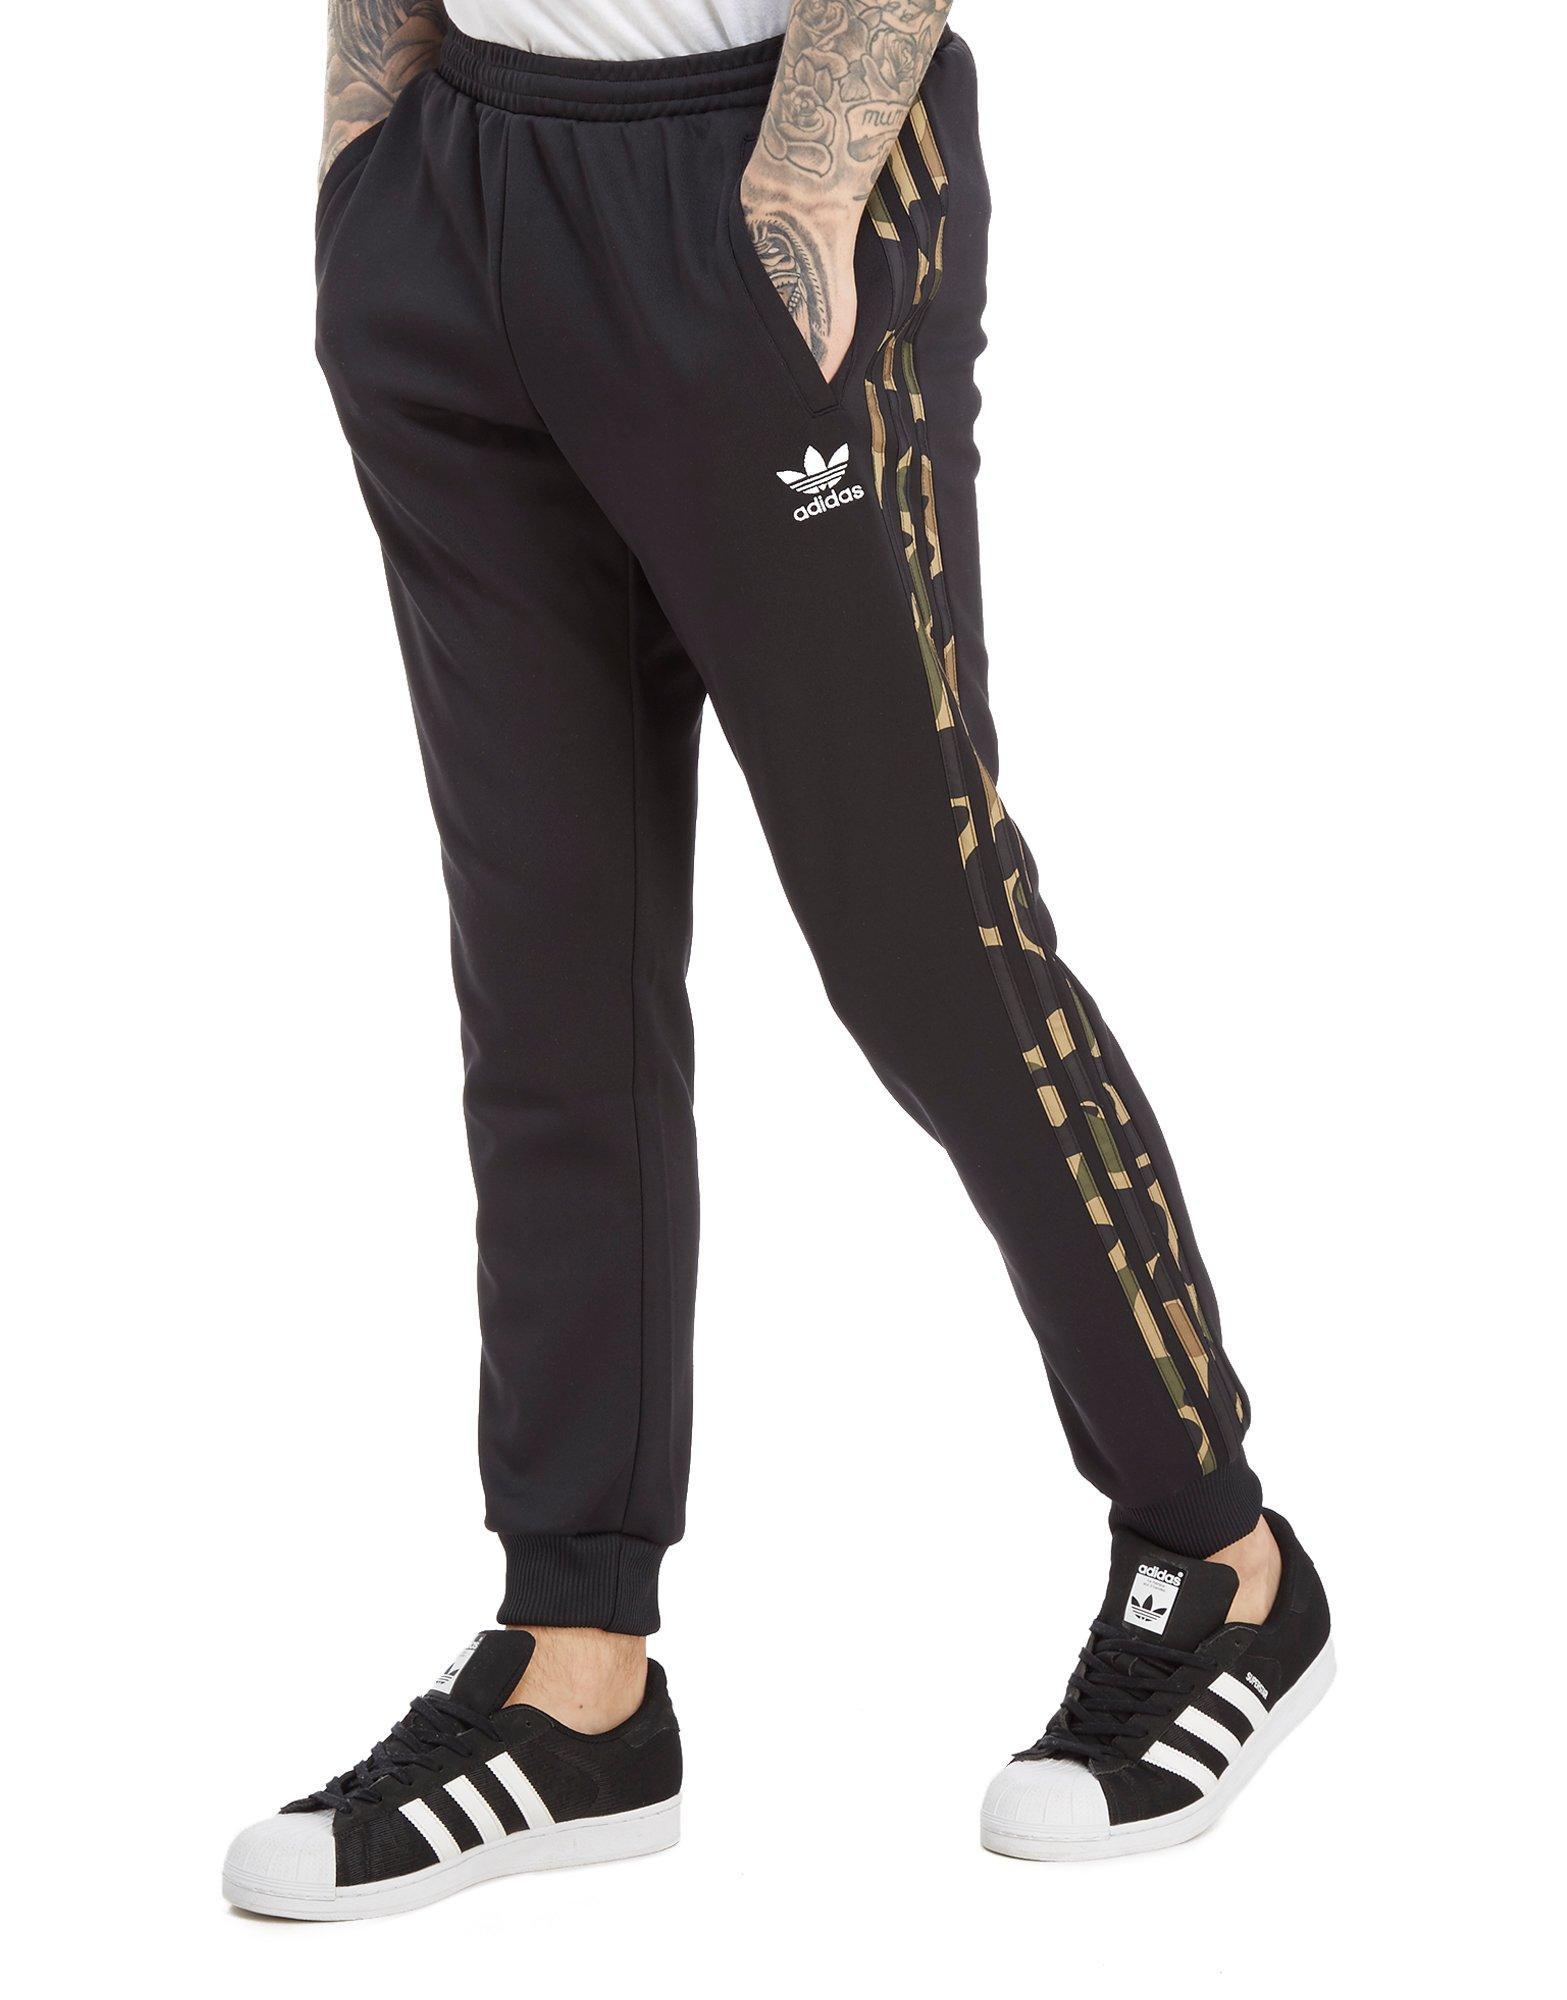 adidas Originals Cotton Trefoil Camo Pants in Black/Camouflage (Black) for  Men - Lyst